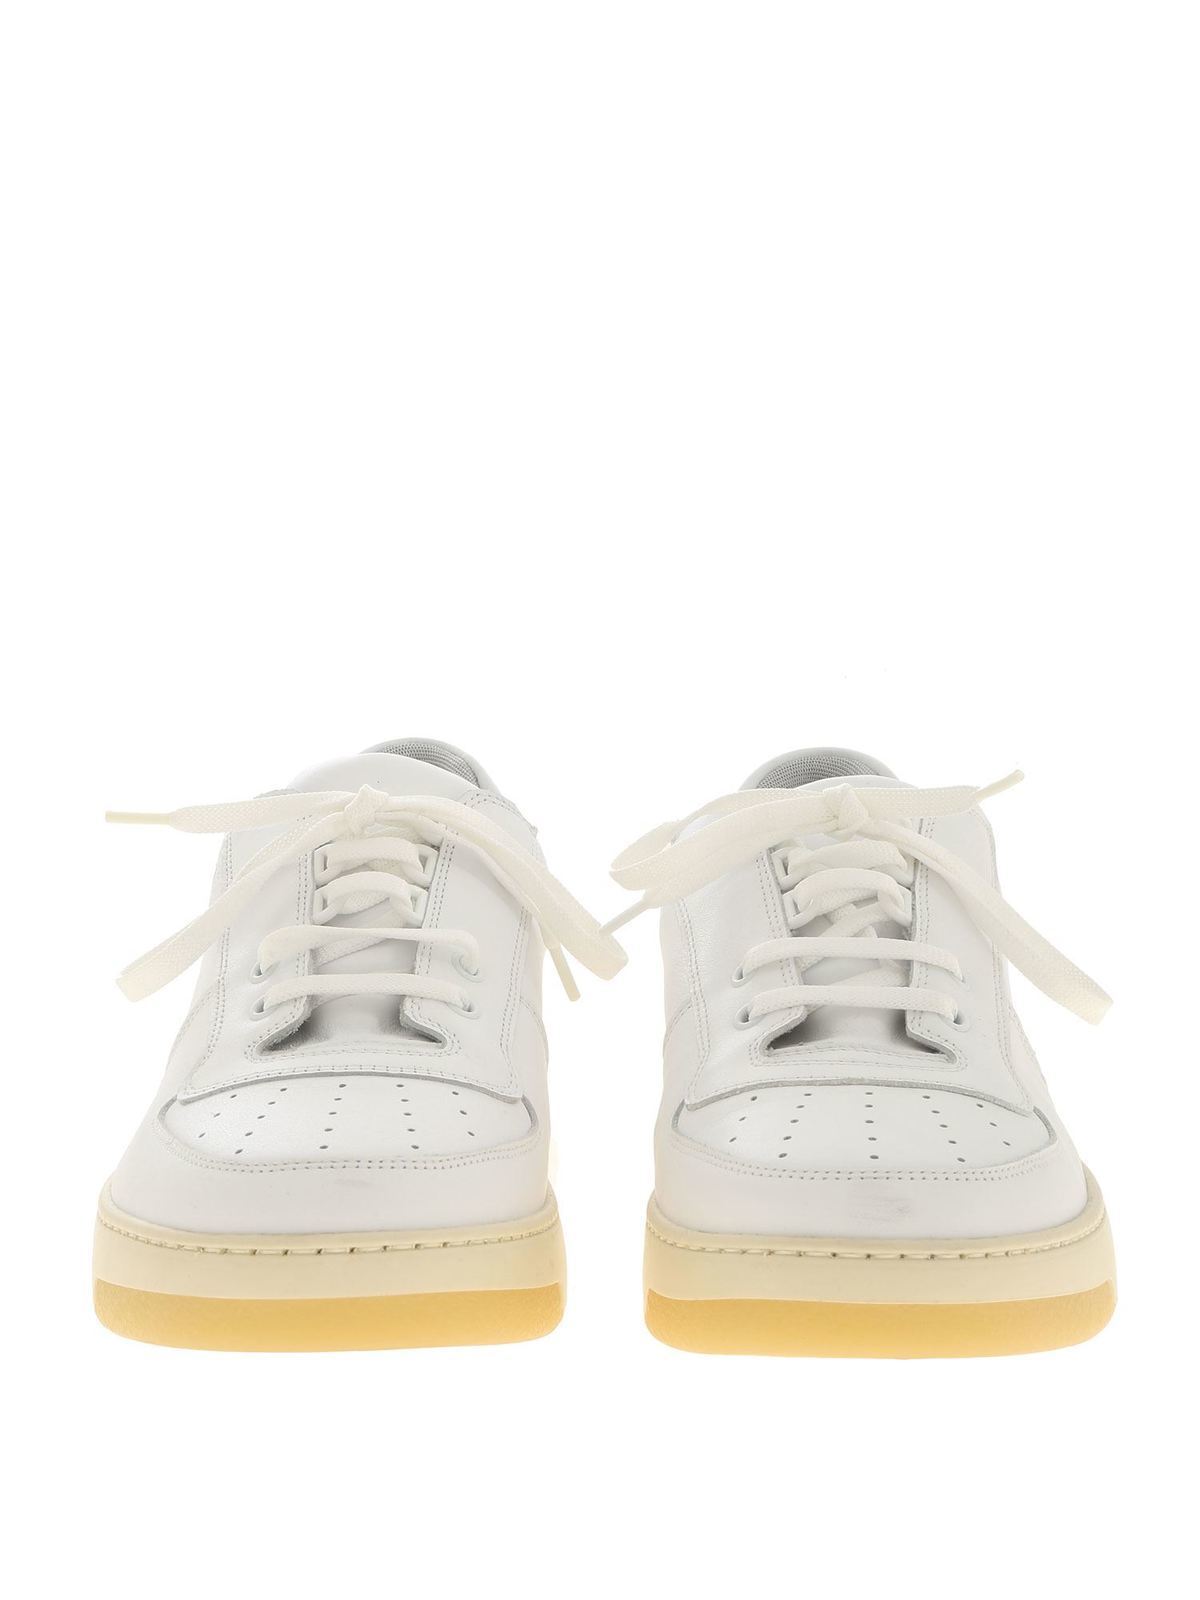 Acne Studios - Perey sneakers in white 